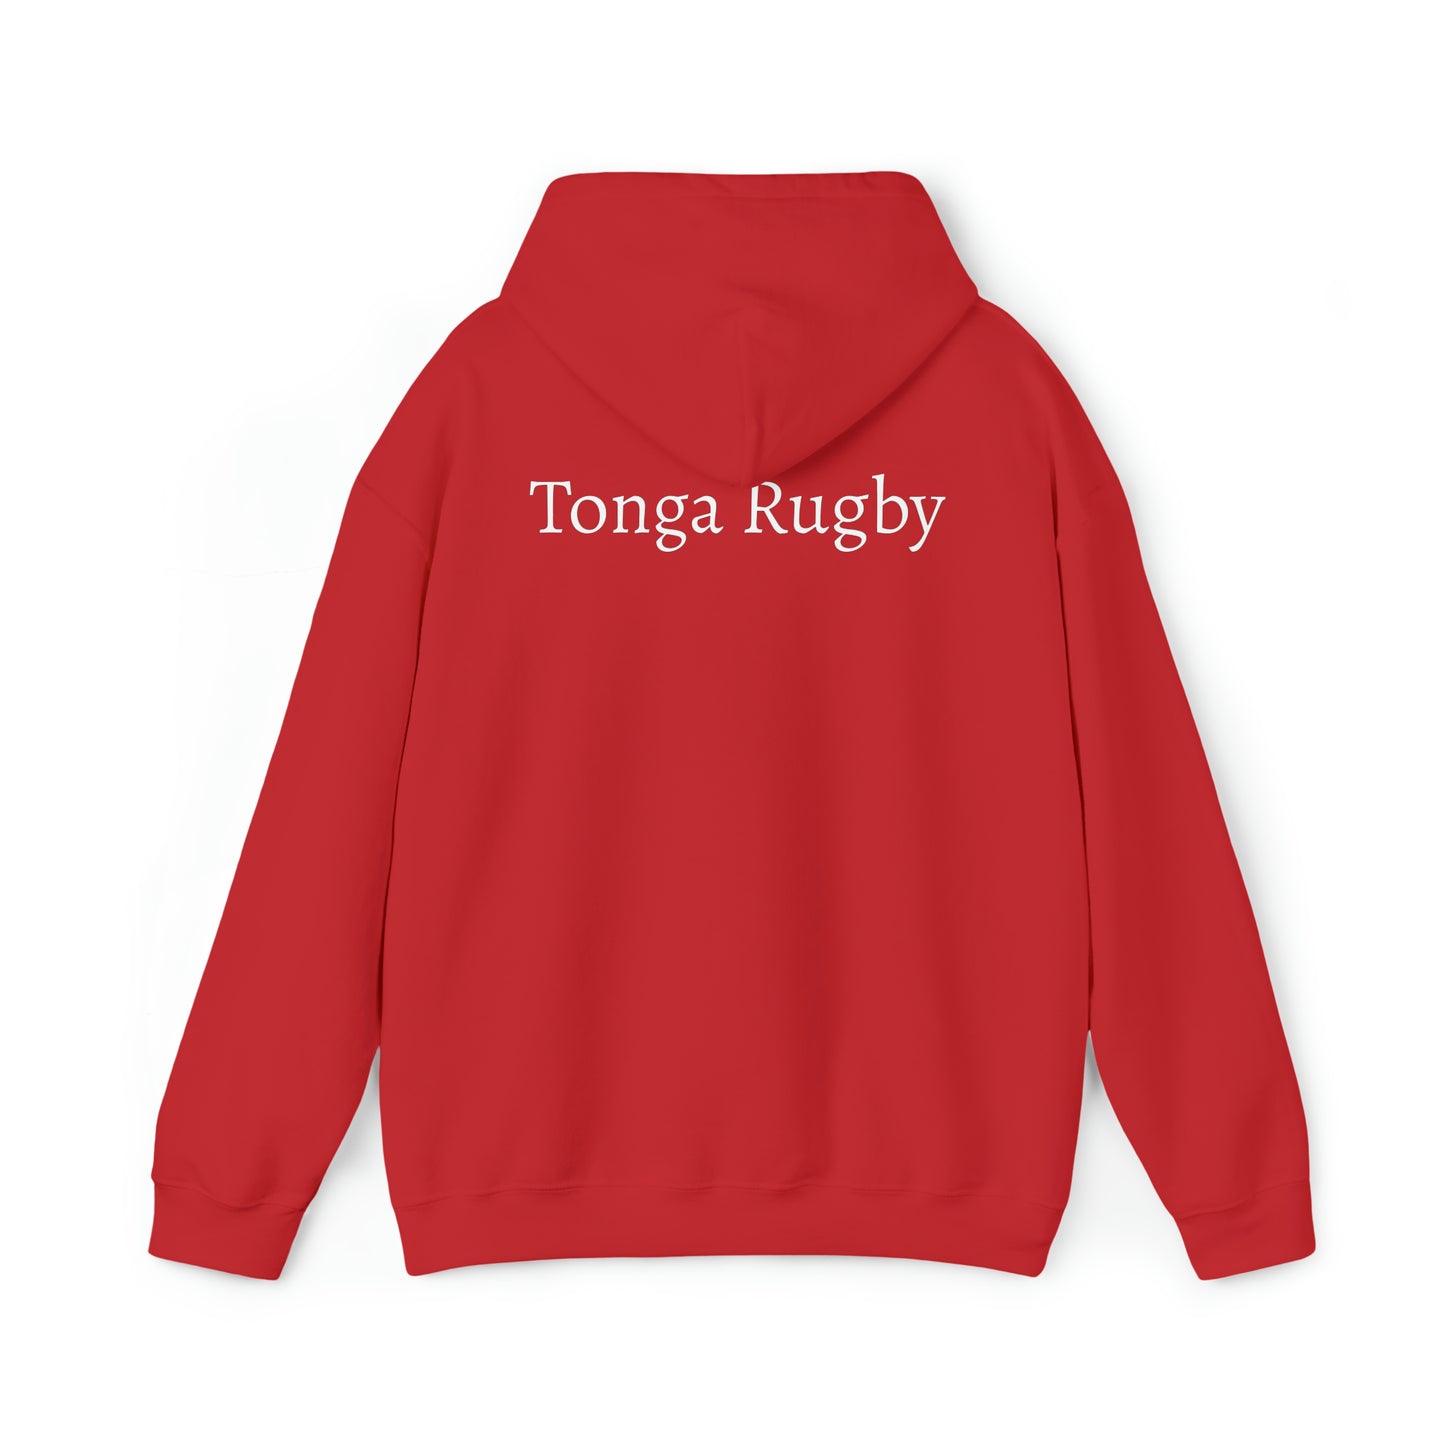 Tonga lifting the RWC - dark hoodies